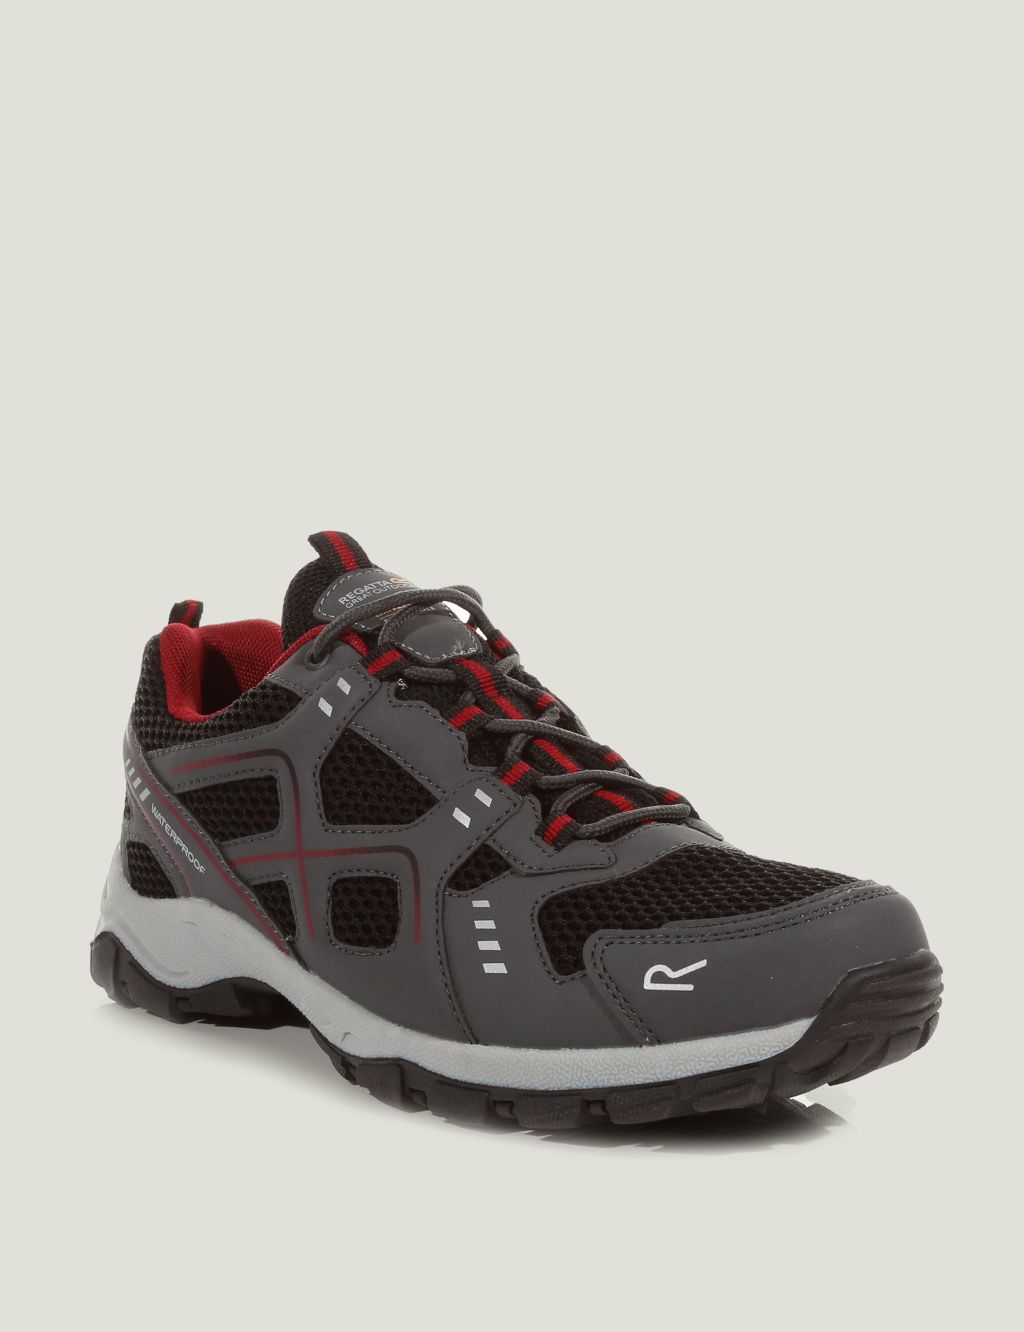 Vendeavour Waterproof Walking Shoes image 2